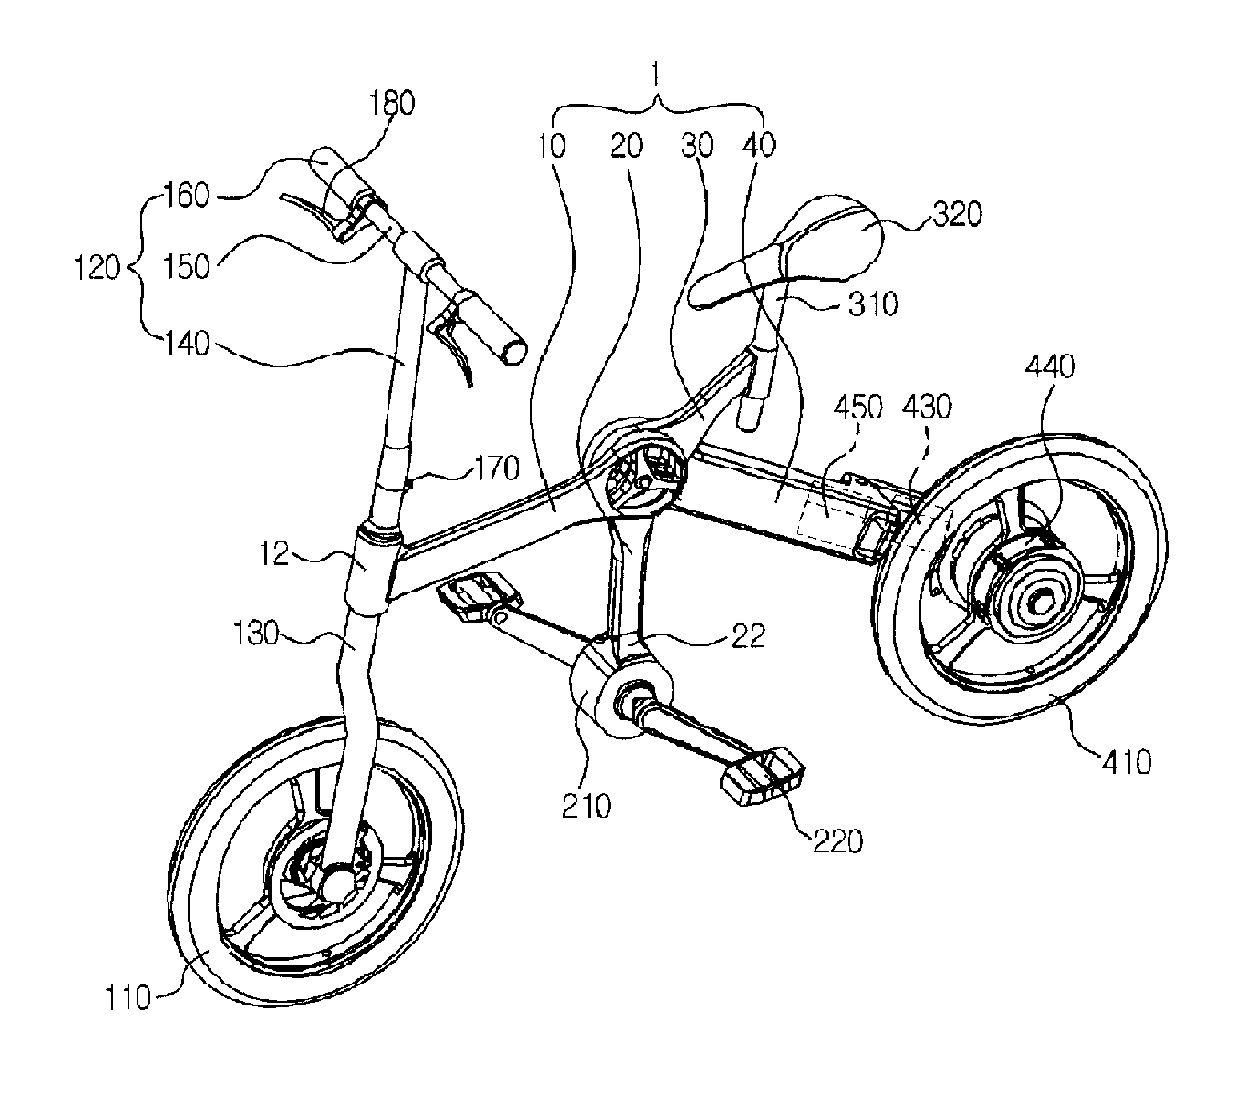 Folding type bicycle